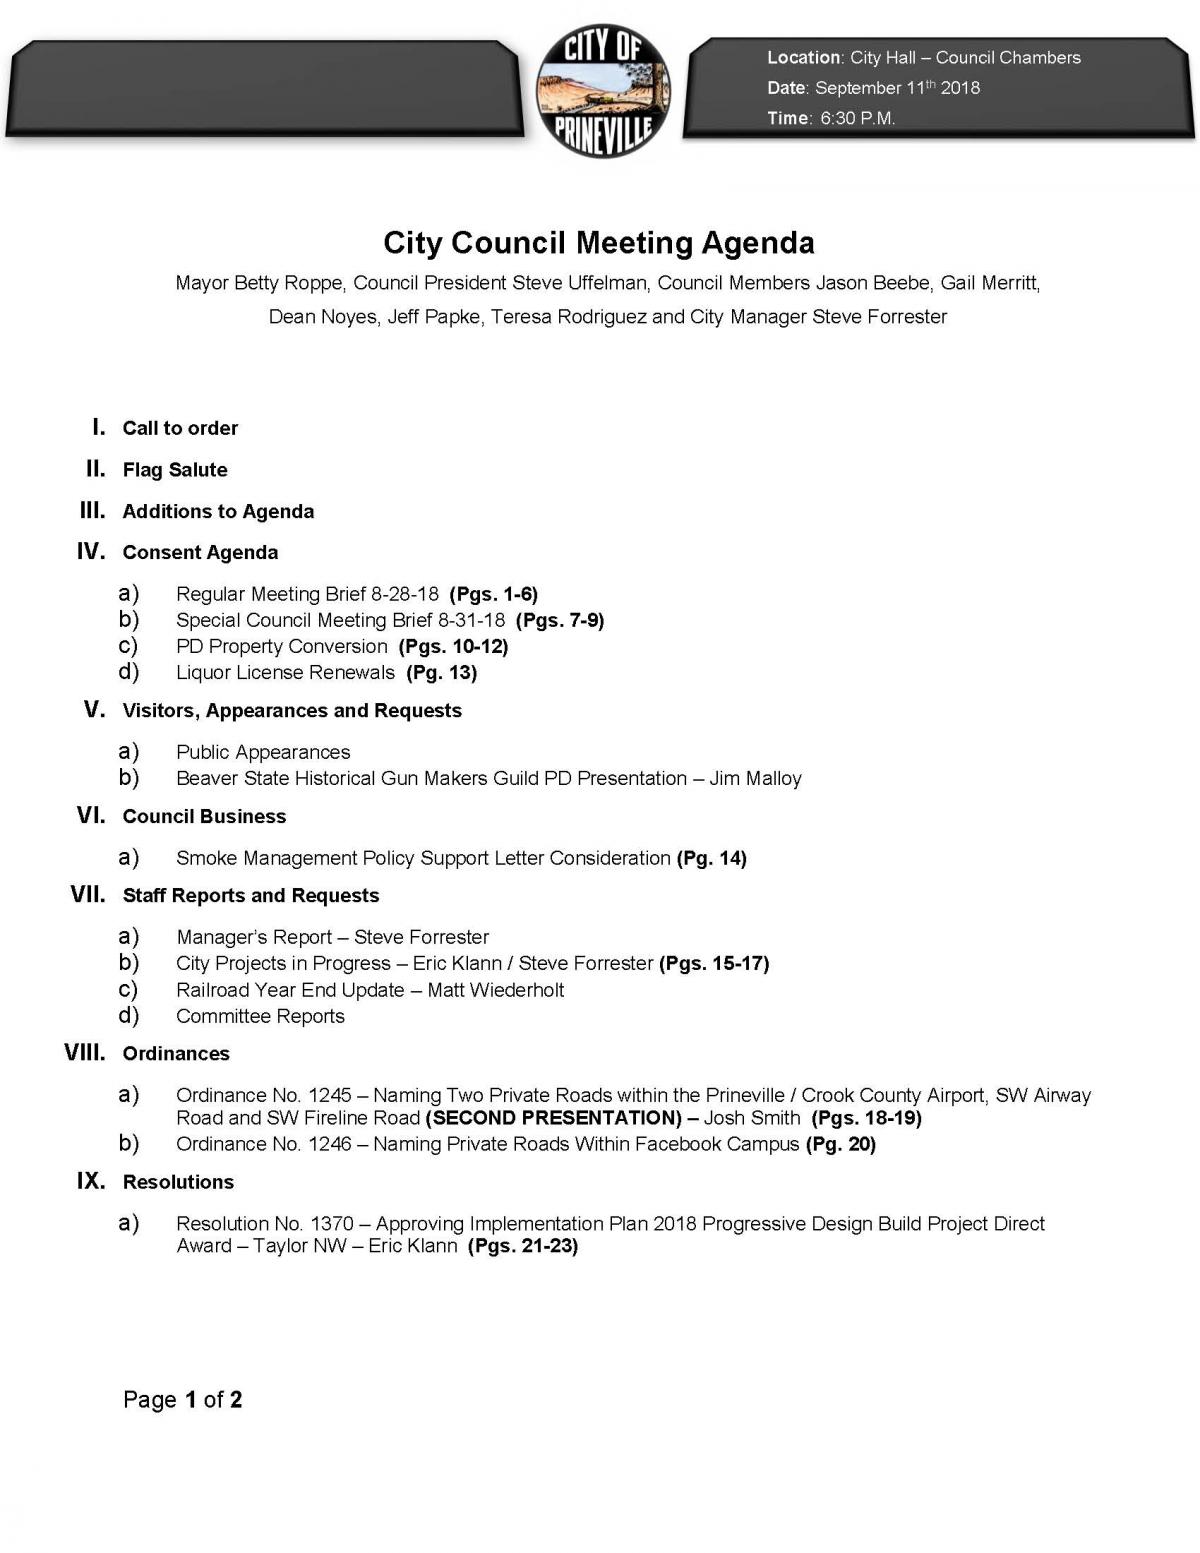 Council Agenda 9-11-18